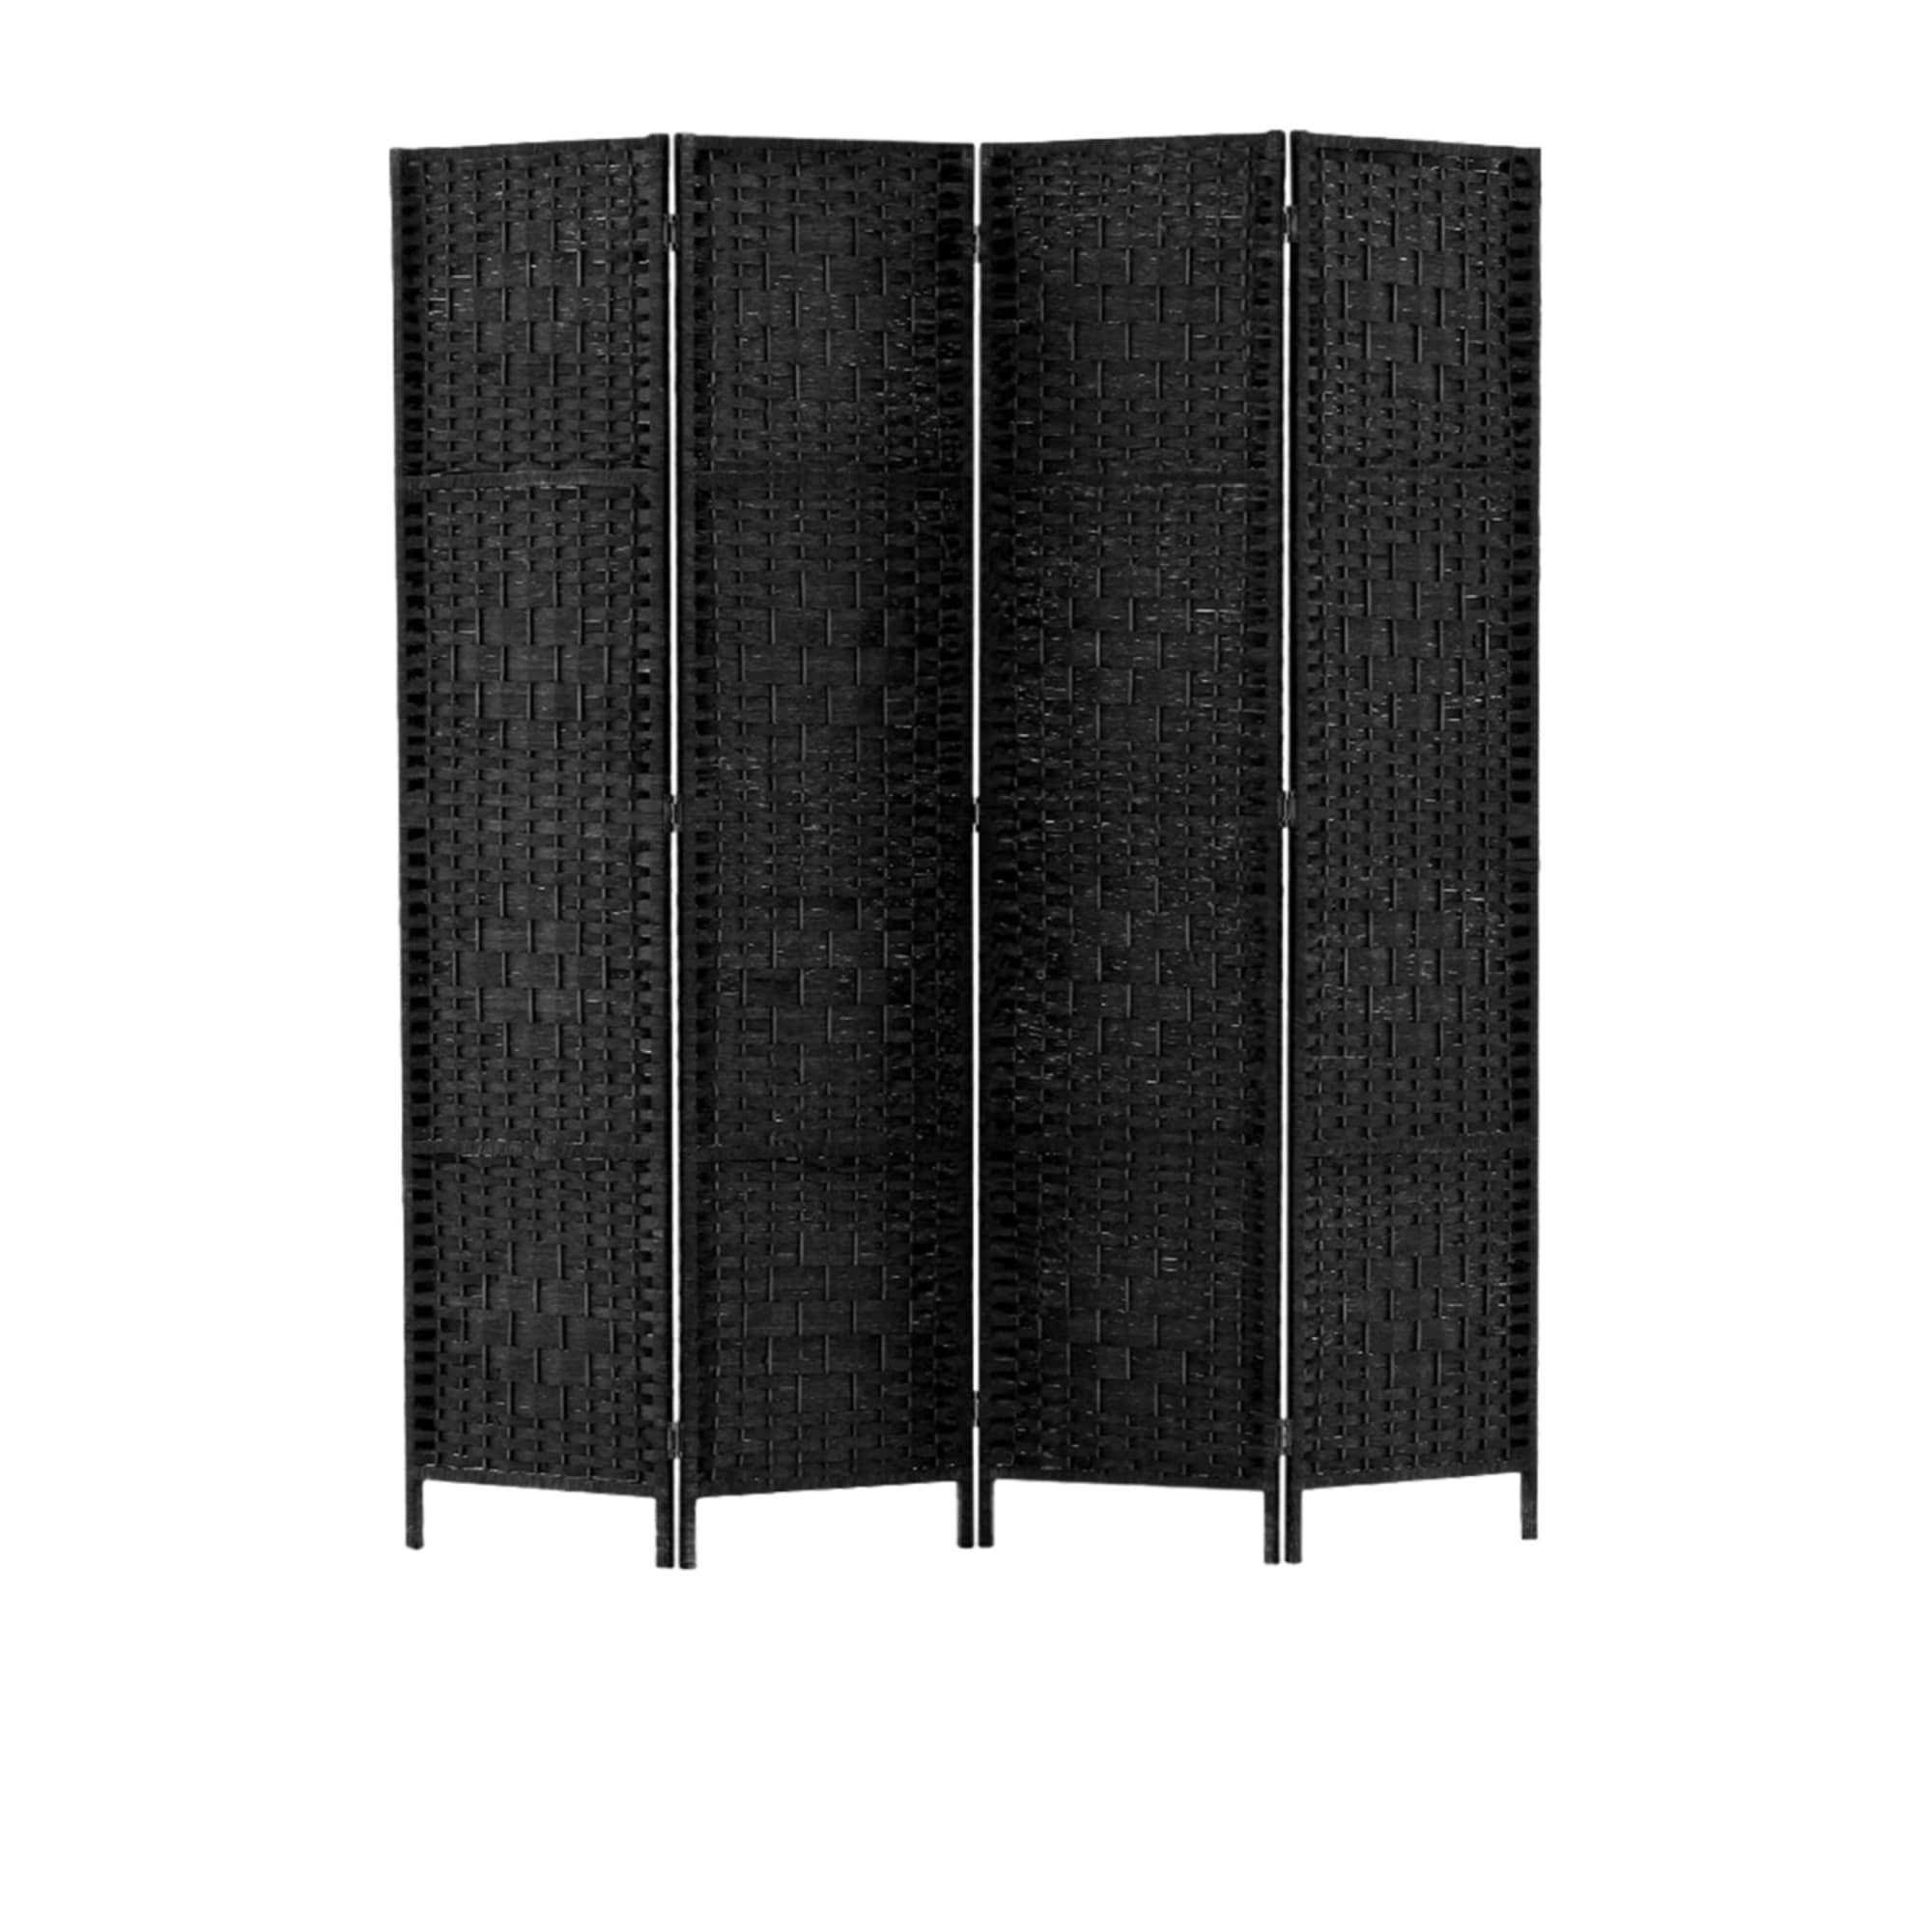 Artiss 4 Panel Rattan Room Divider Black Image 1